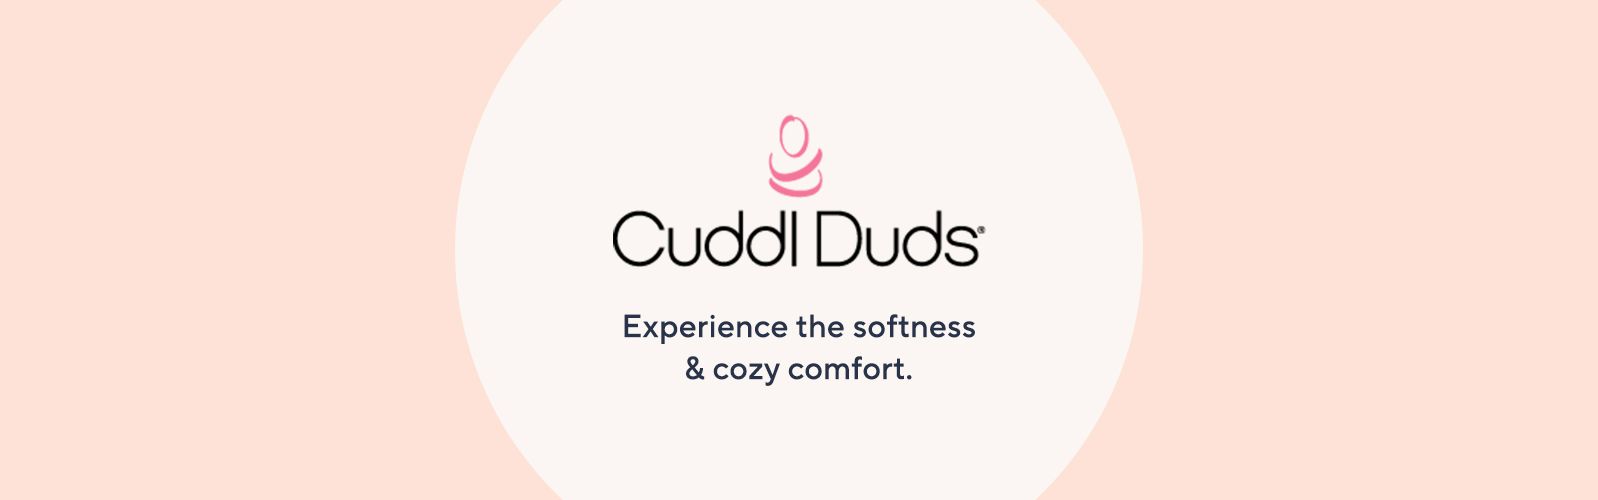 Cuddl Duds Fleecewear Stretch Leggings Pack of 2 - QVC.com